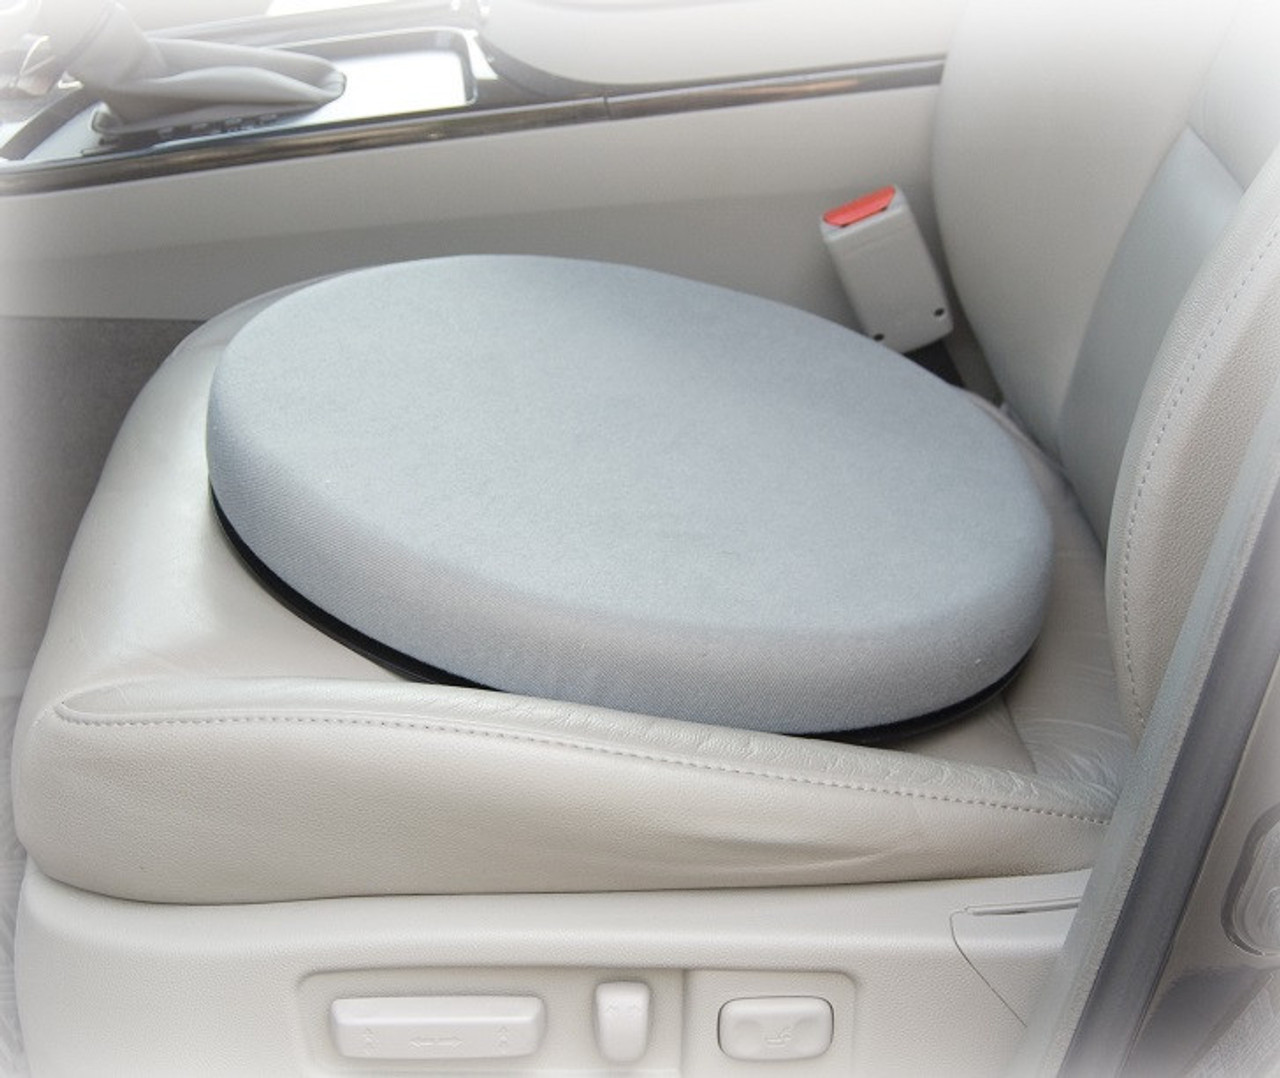  Stander Auto Swivel Cushion Seat, Padded Rotating